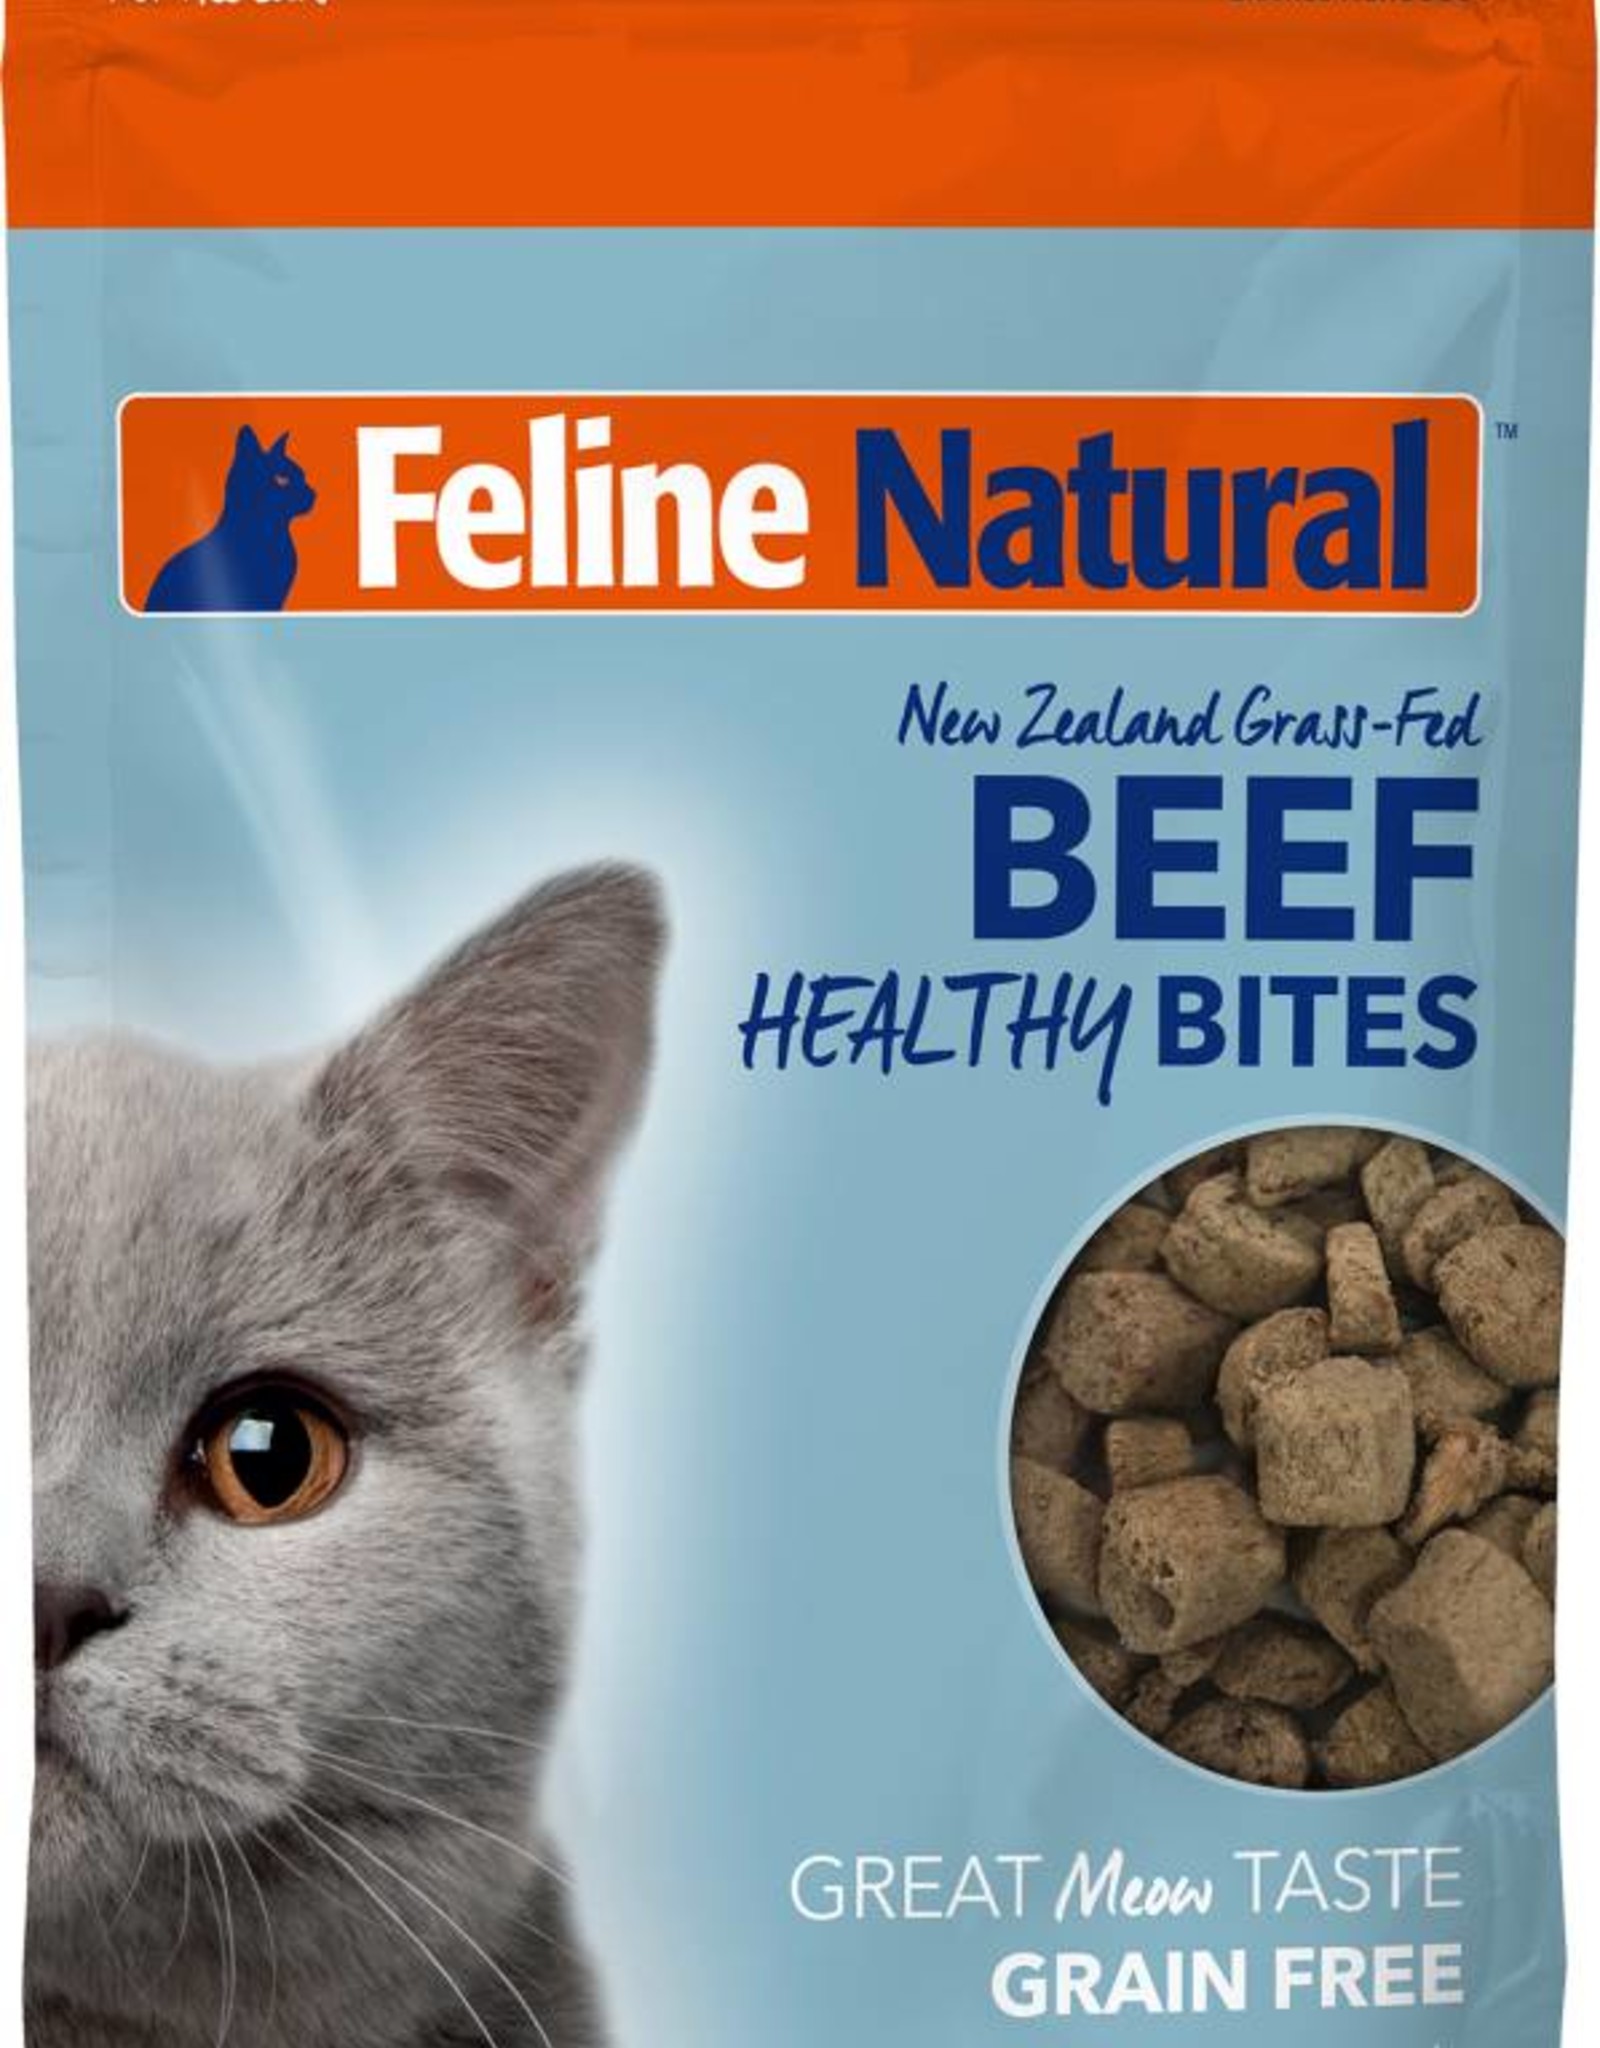 K9 Natural Feline Natural Beef Healthy Bites for Cats